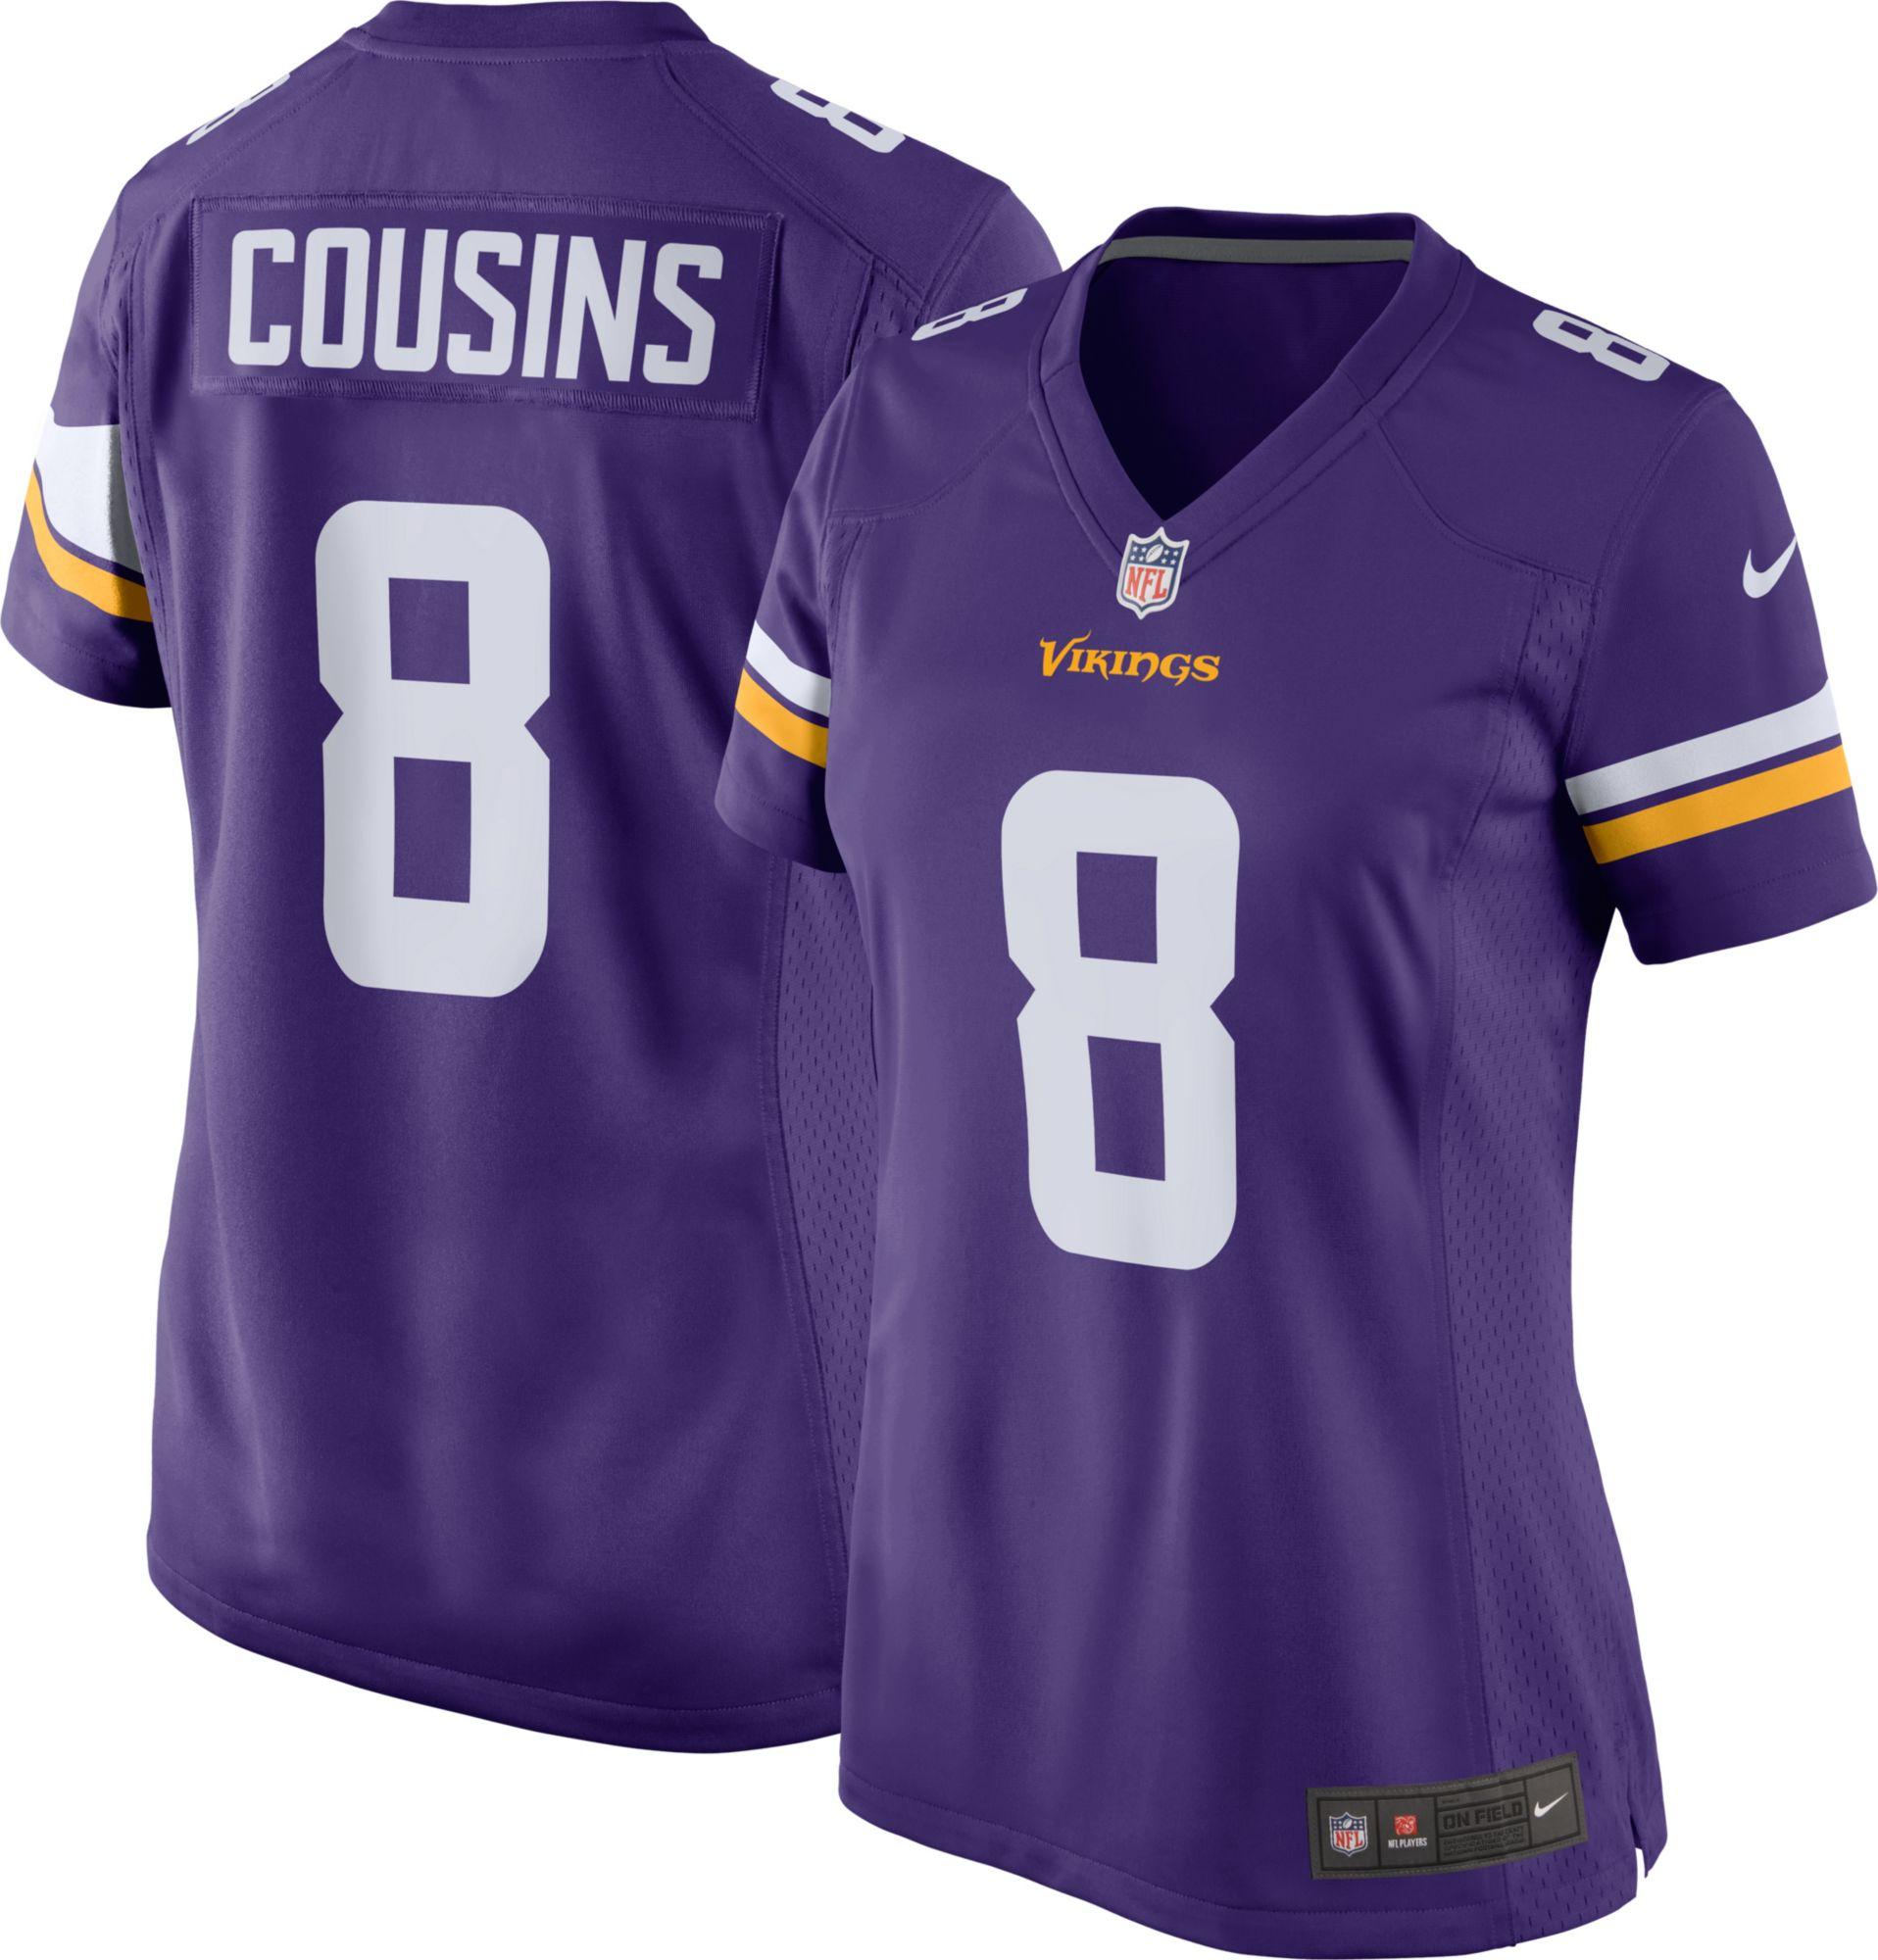 Nike Satin Minnesota Vikings Kirk Cousins #8 Home Game Jersey in Purple ...